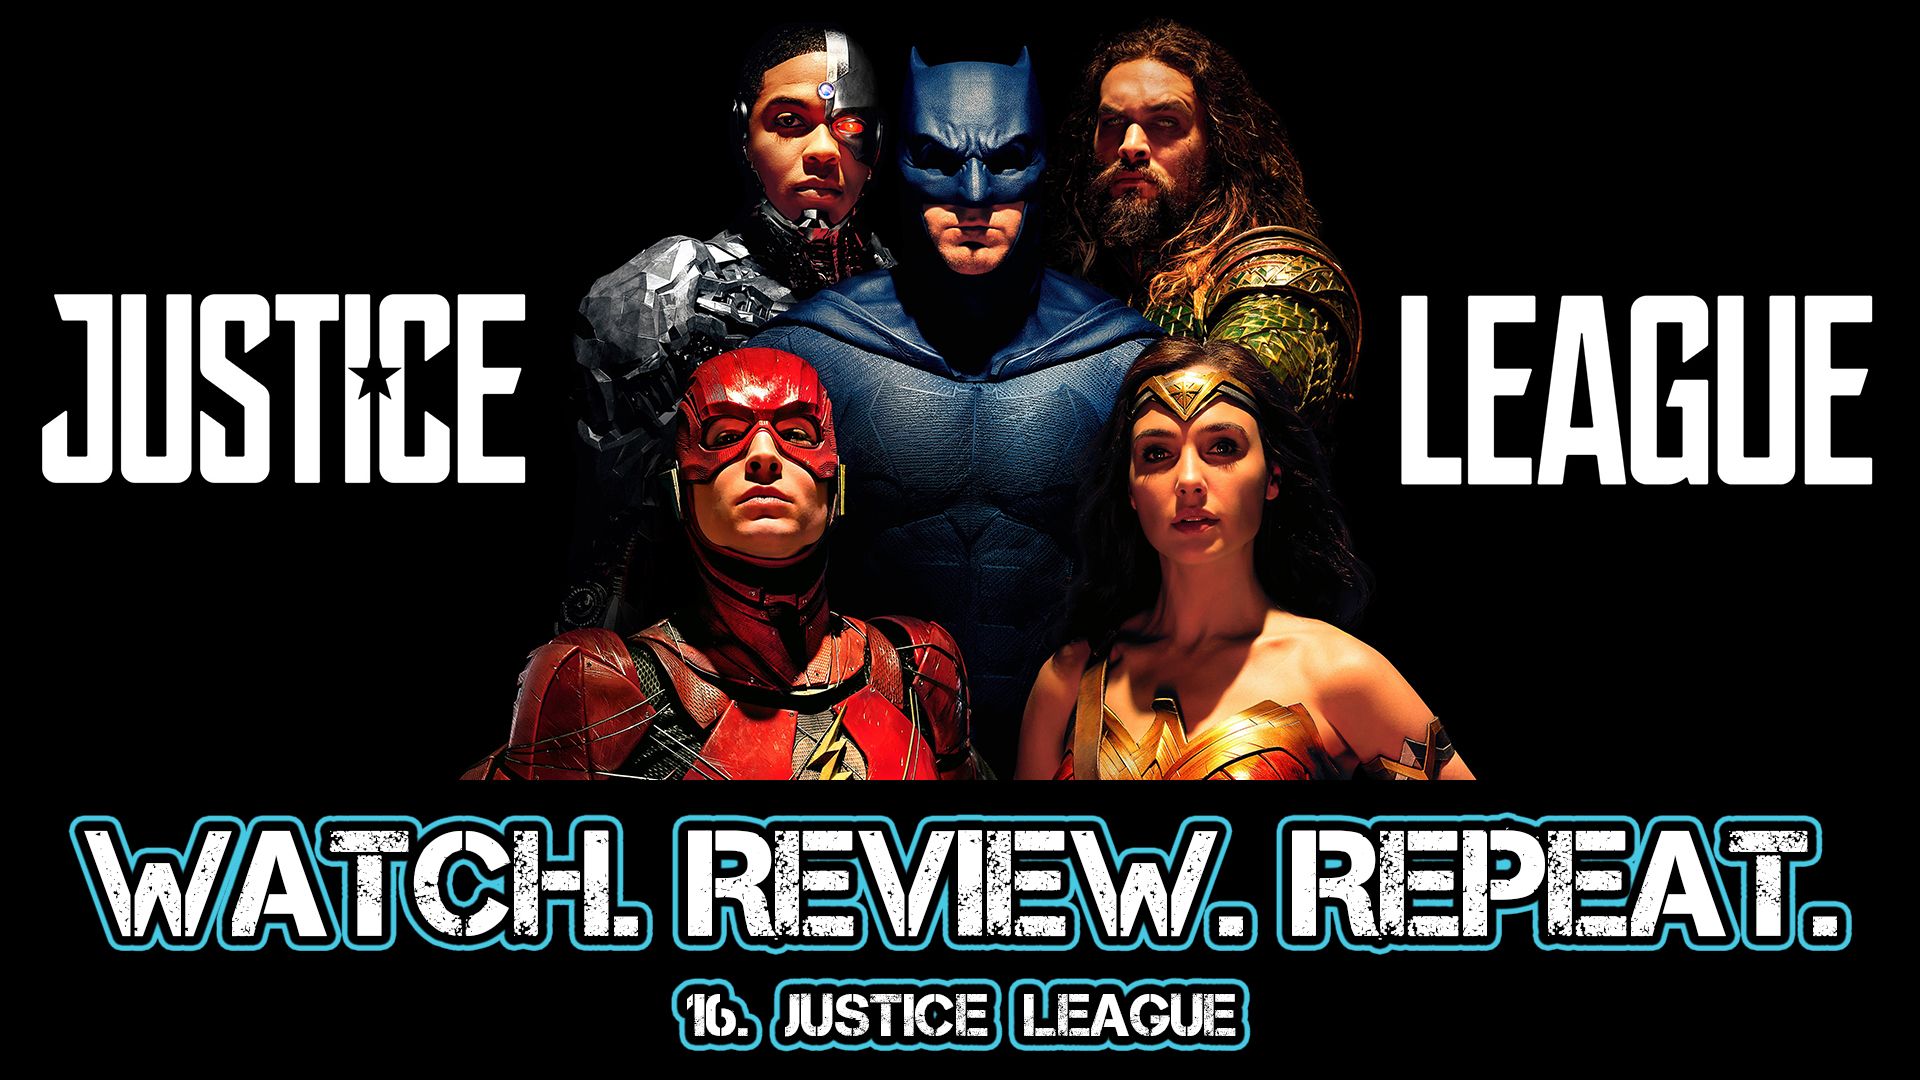 Copy of 16. Justice League